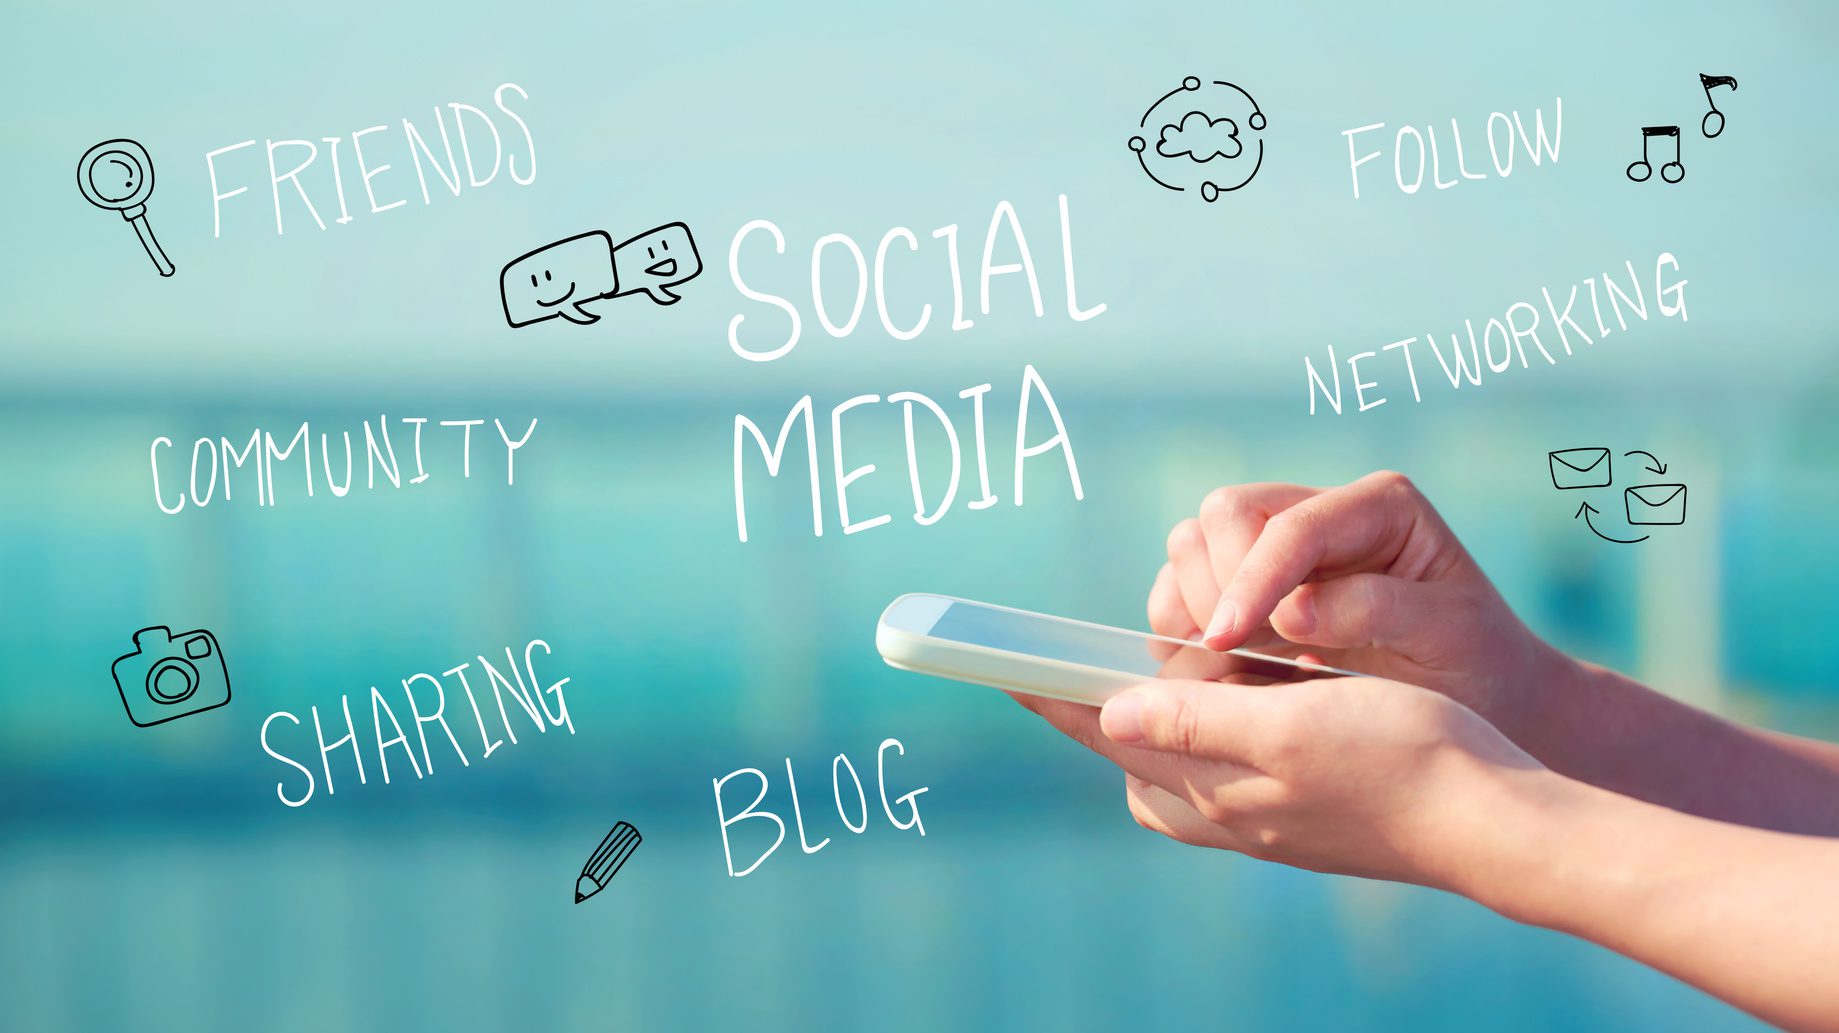 Top Tips for Effective Social Media Marketing